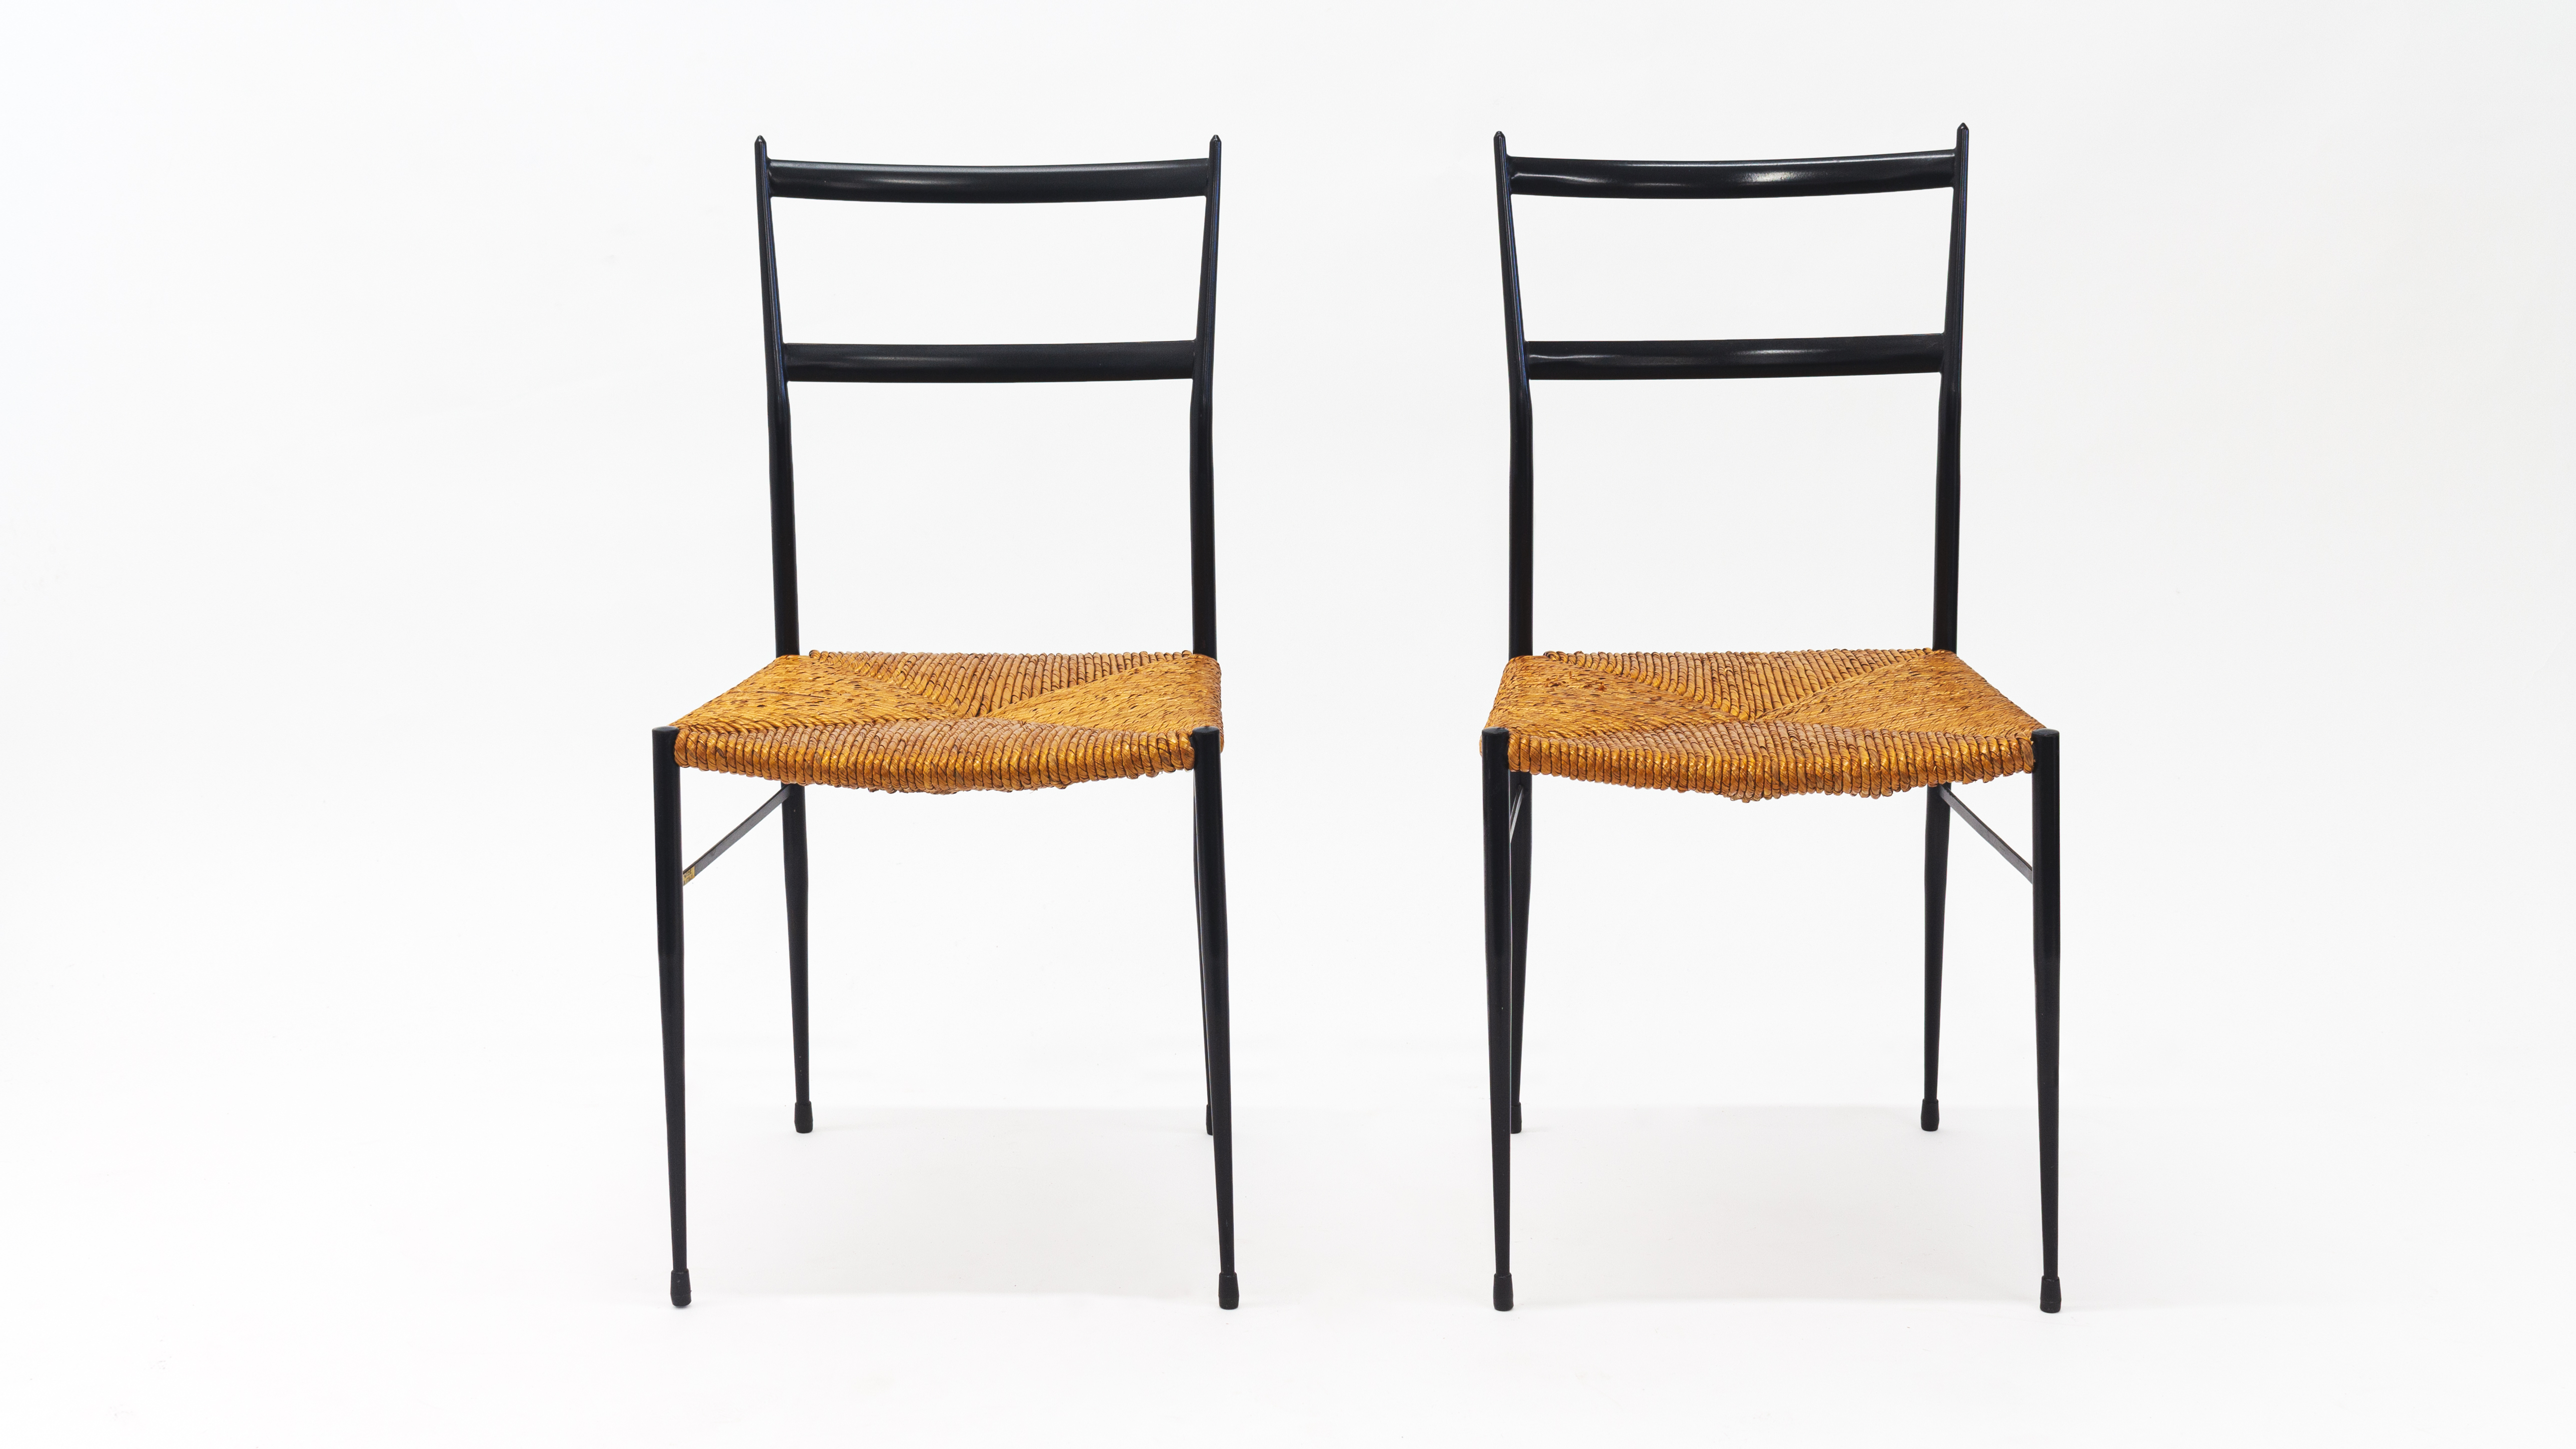 Pair of Mid Century Metal Superleggera Chairs, Attributed to Gio Ponti.